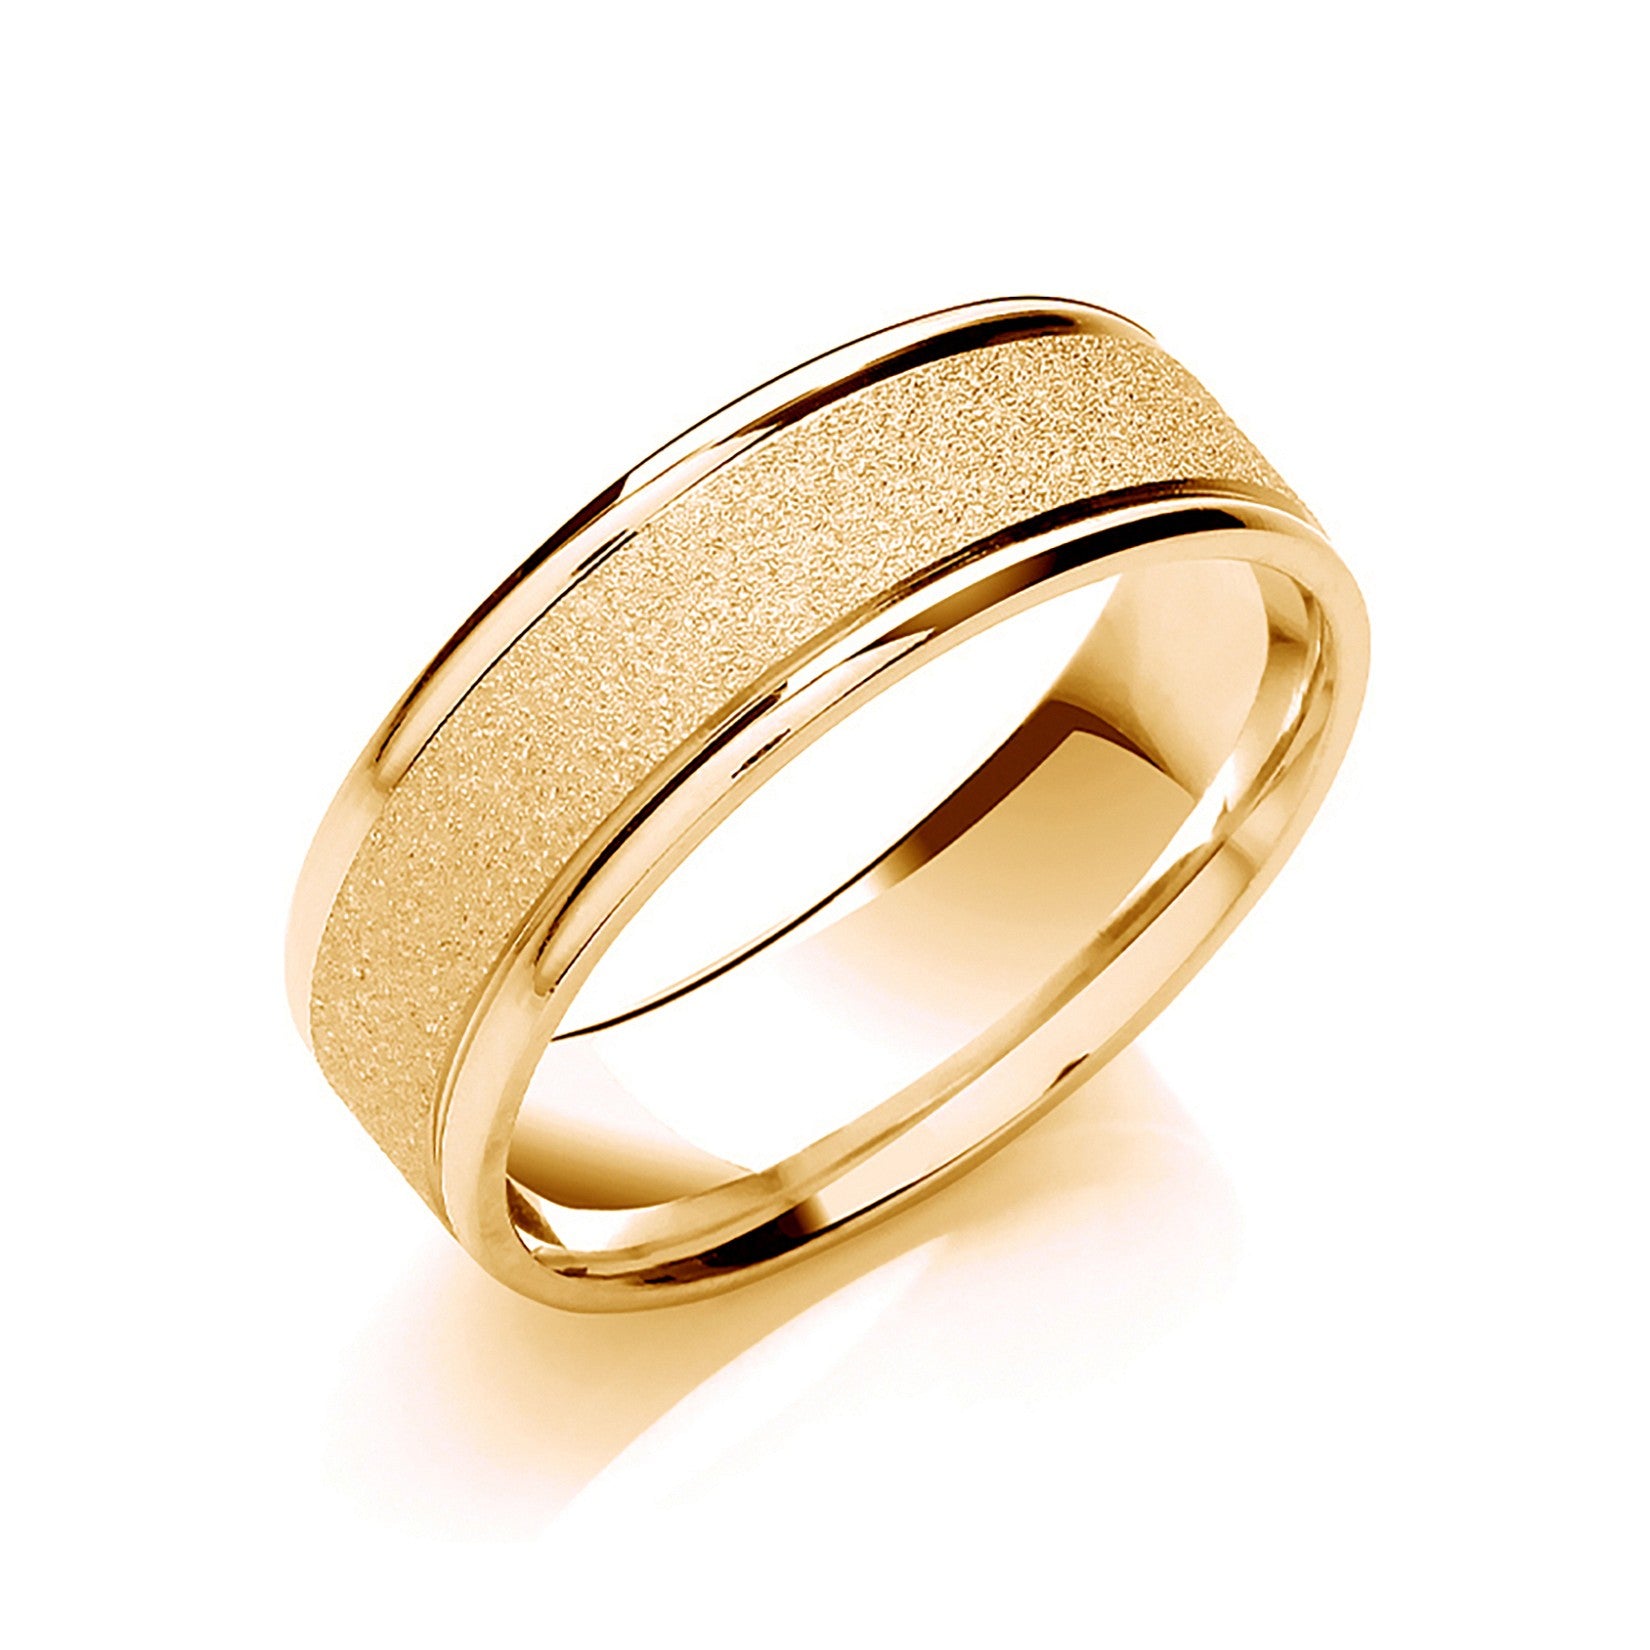 7mm 9CT Gold Sandblasted Diamond Cut Wedding Band - Robert Anthony Jewellers, Edinburgh